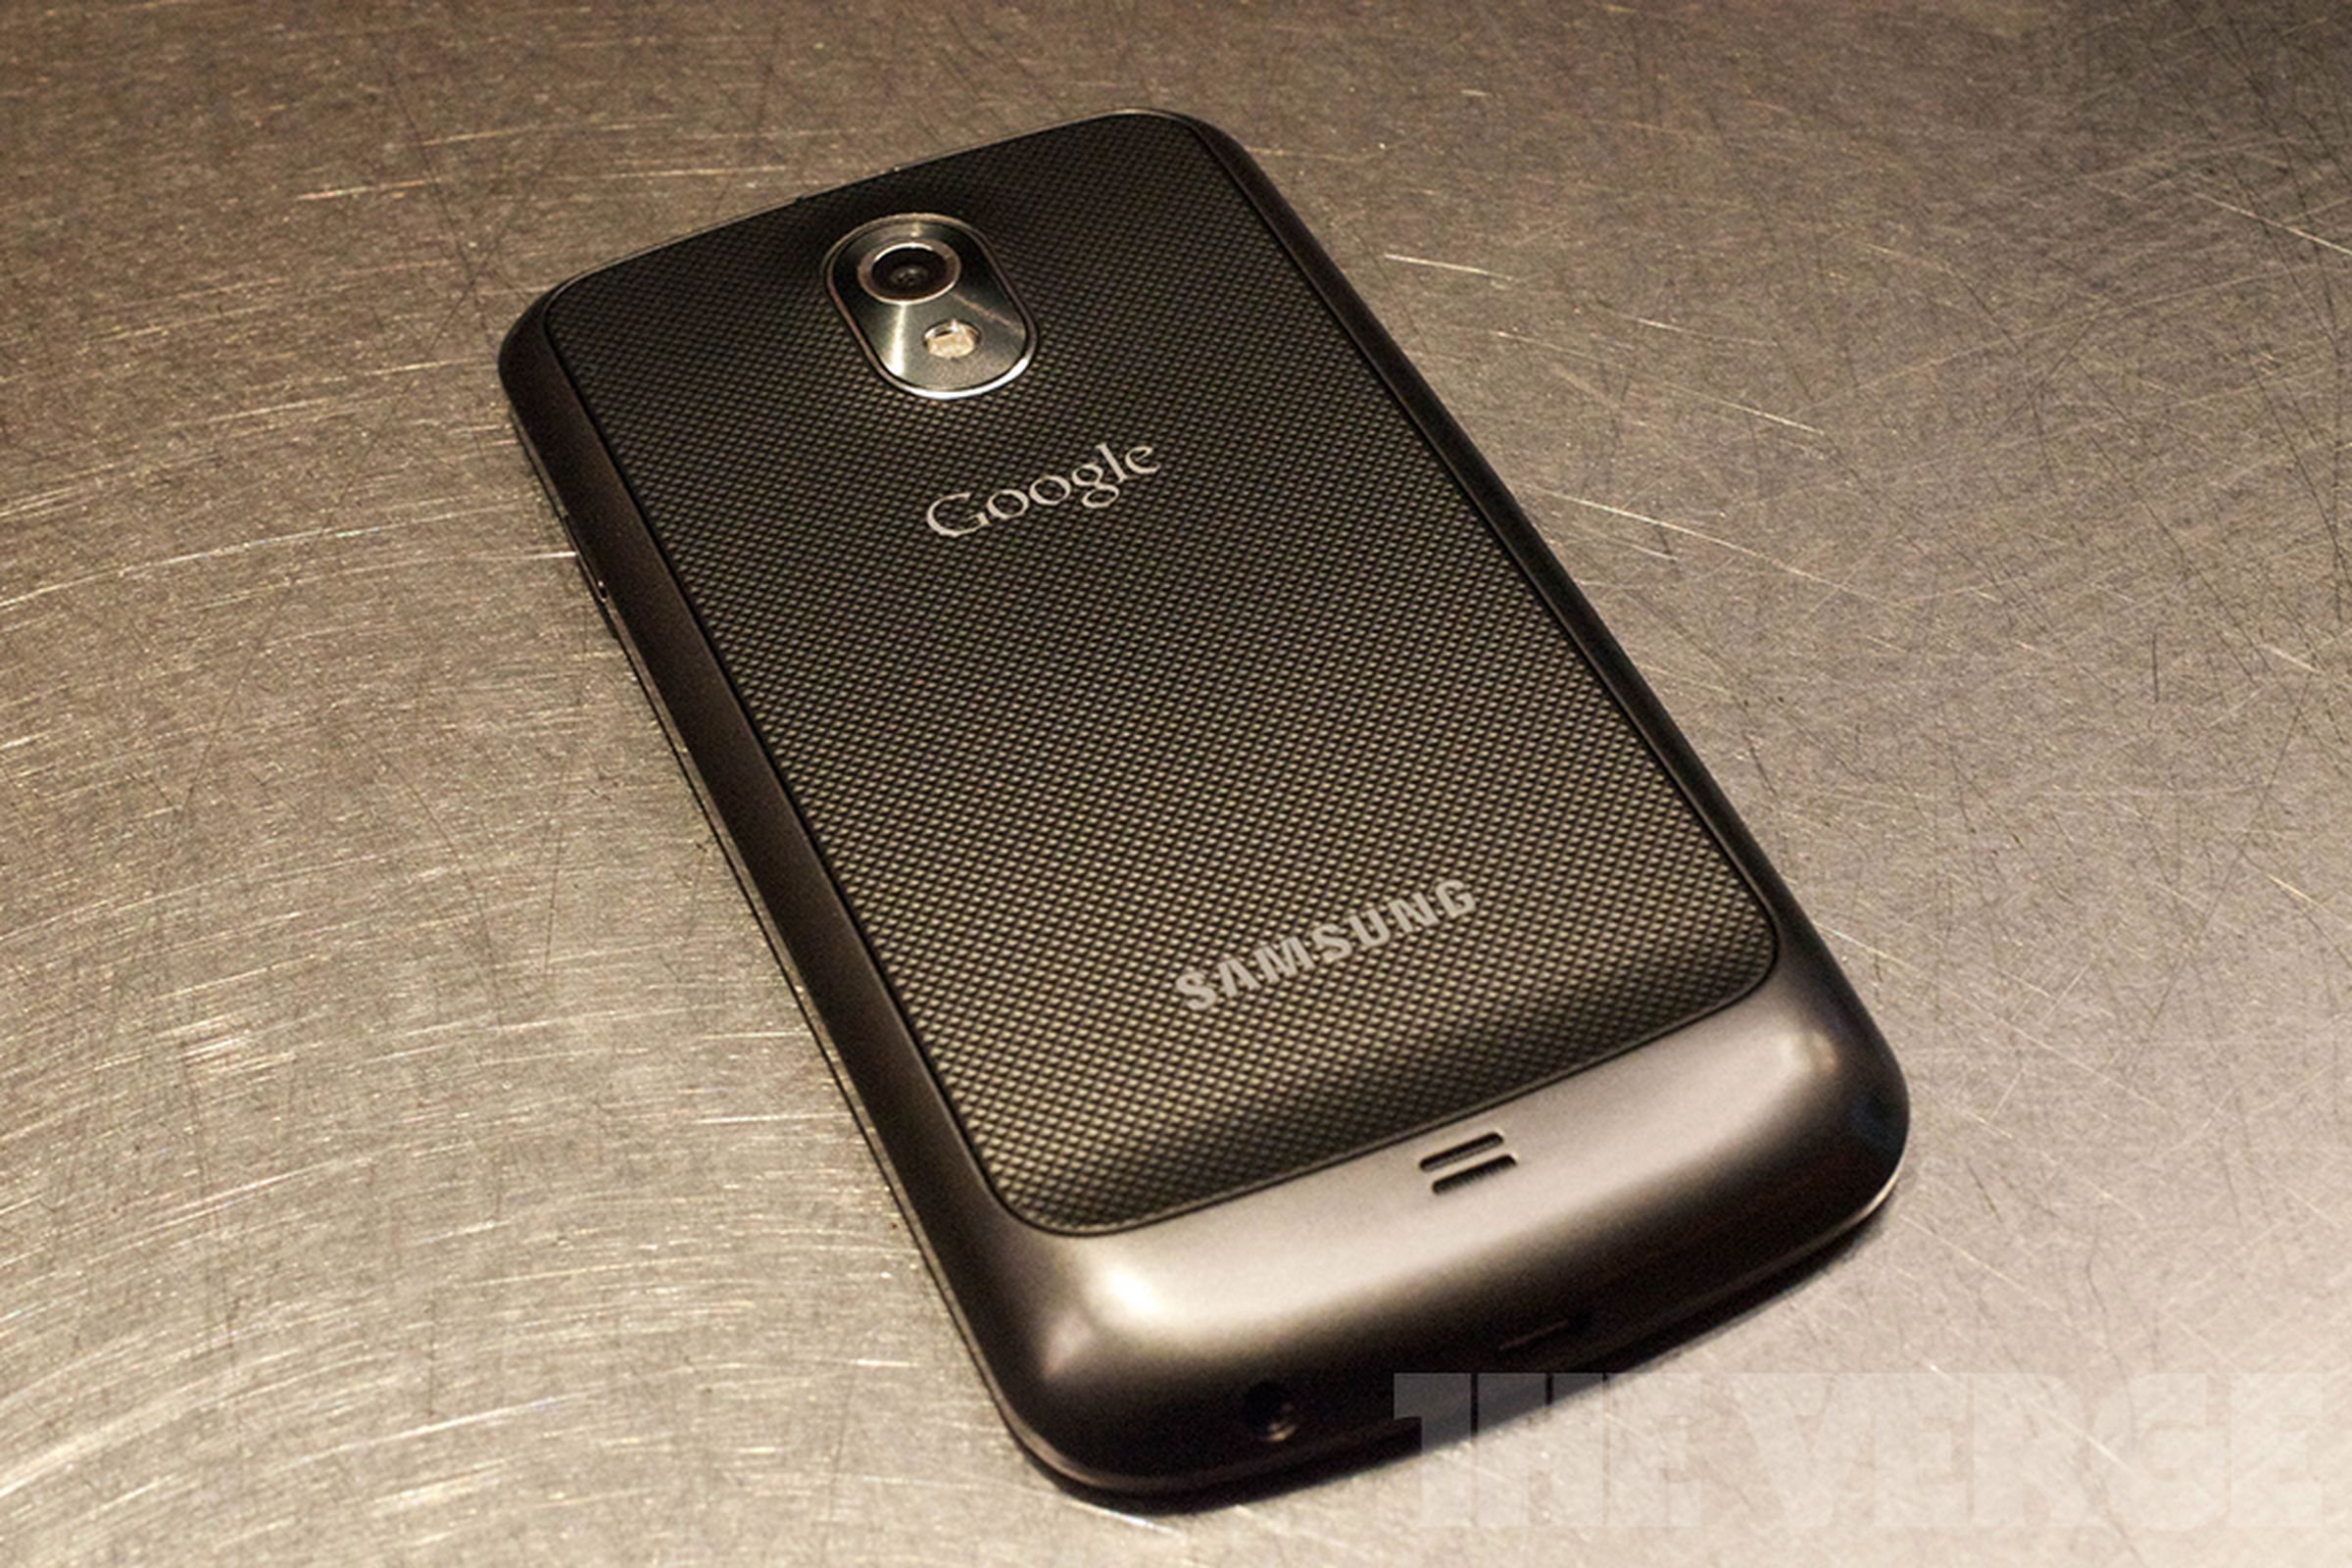 Galaxy Nexus (GSM) stock (1020)